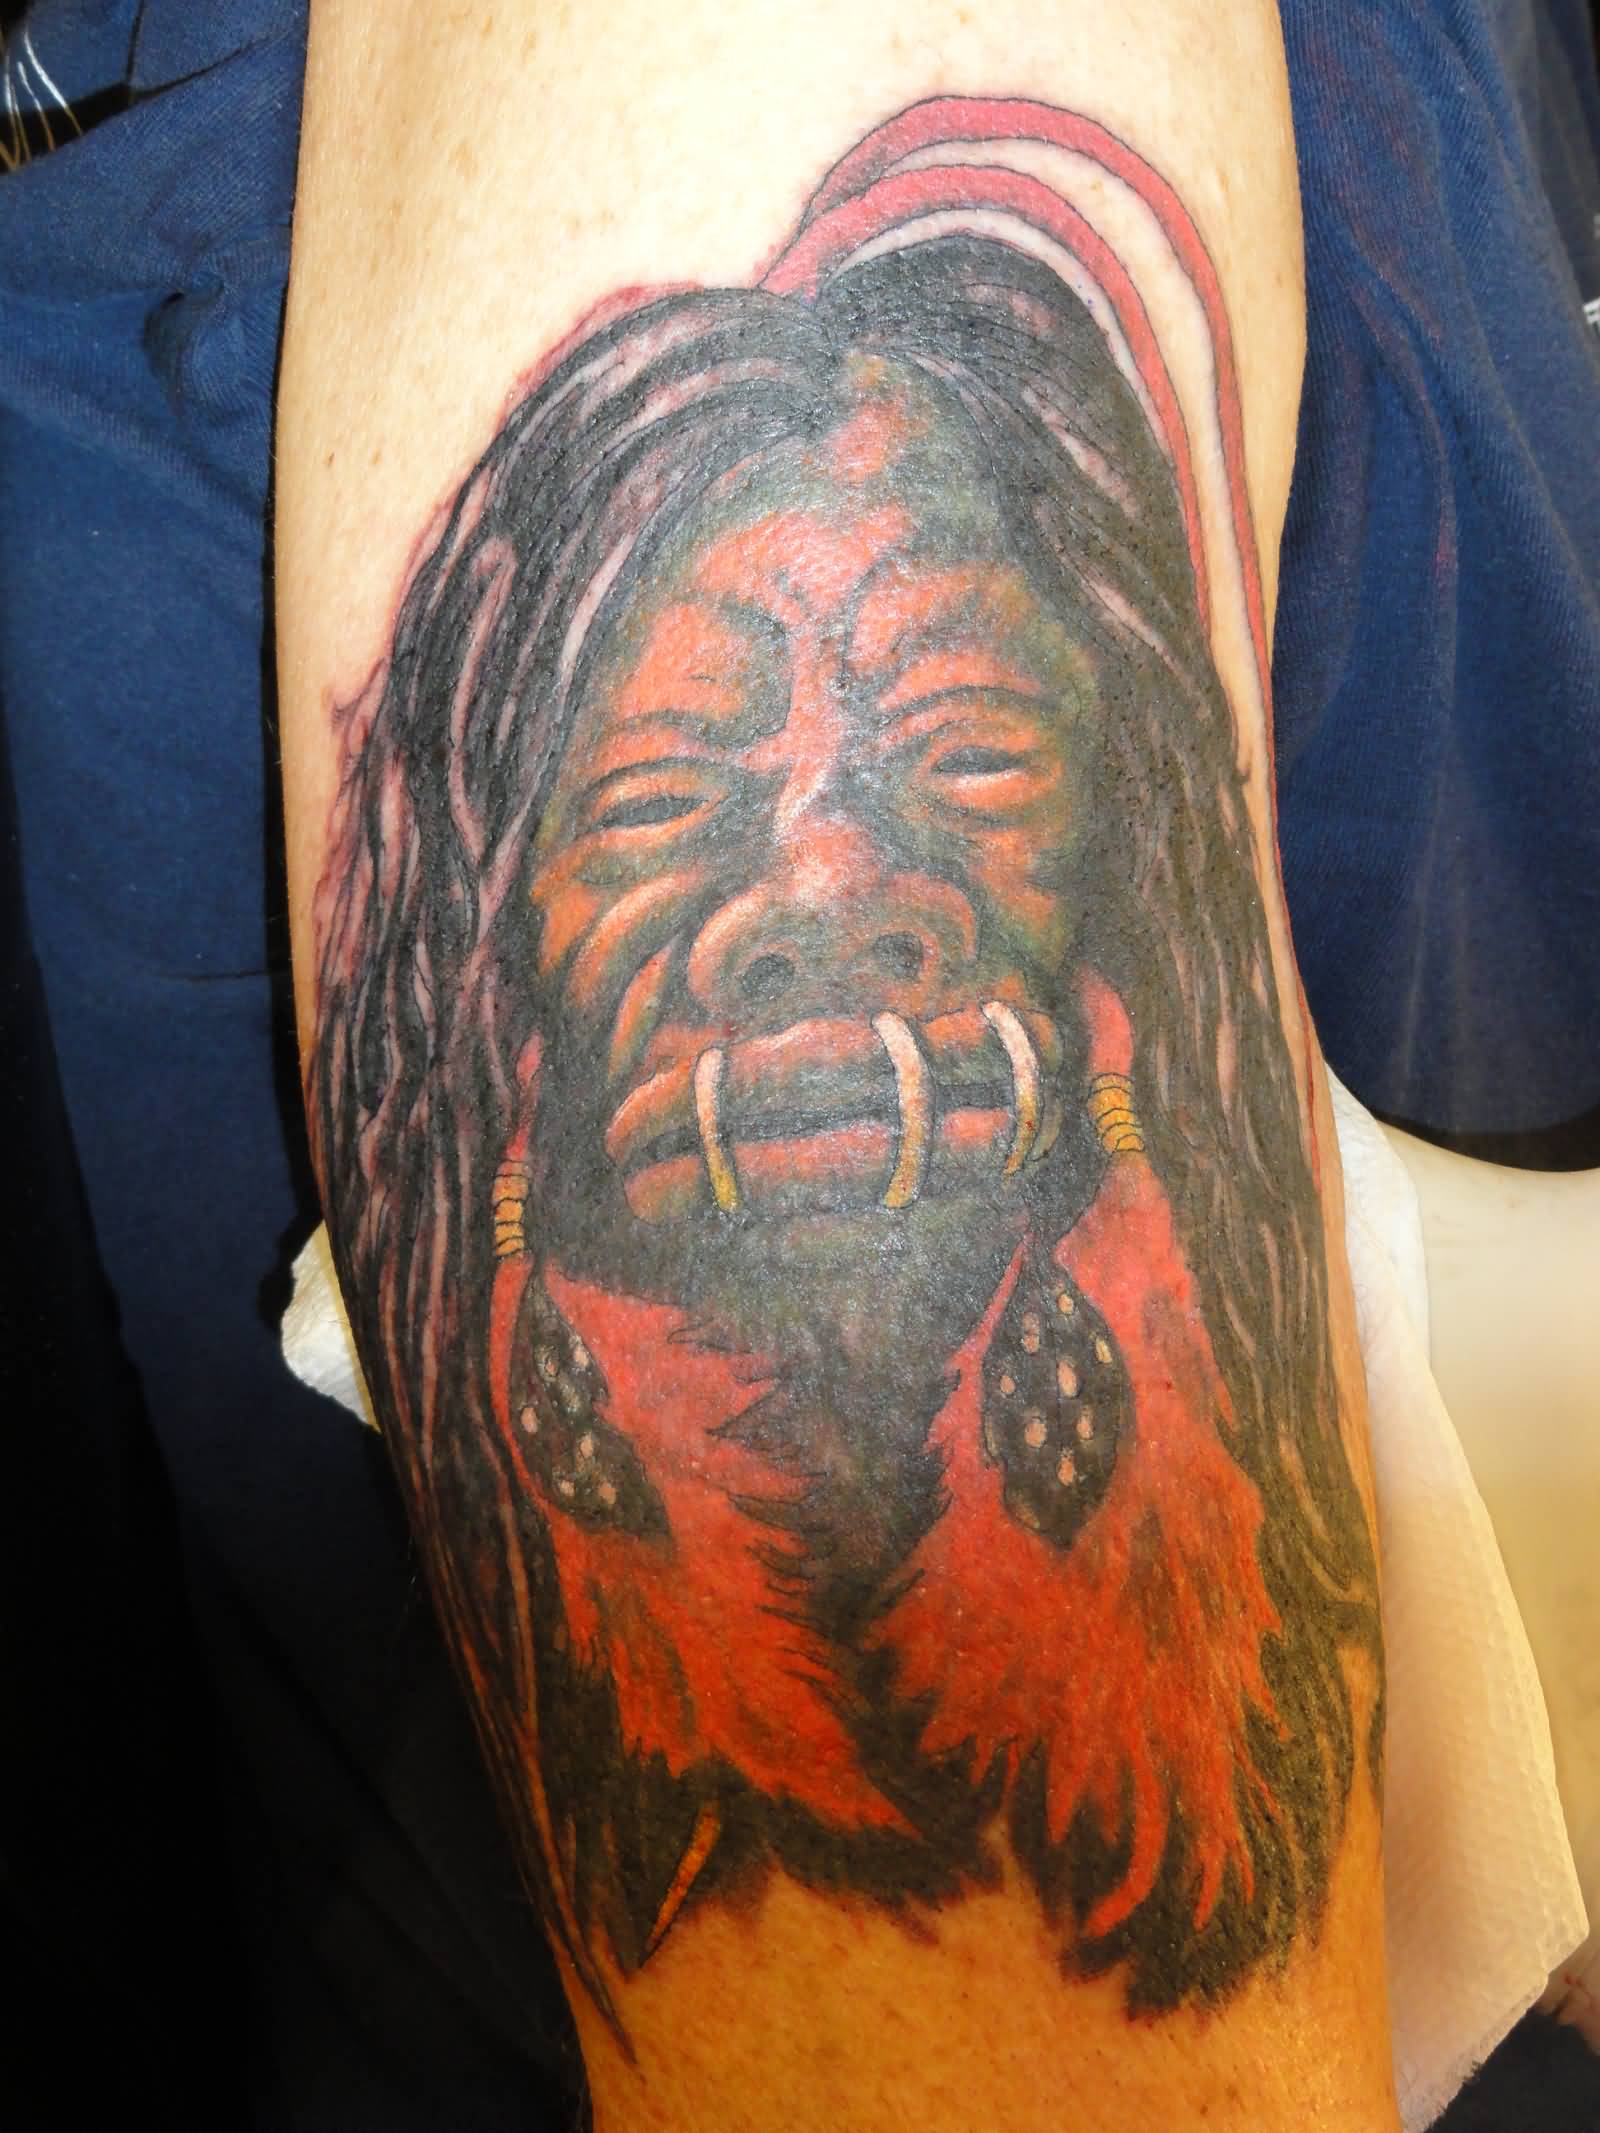 Native American Shrunken Head Tattoo